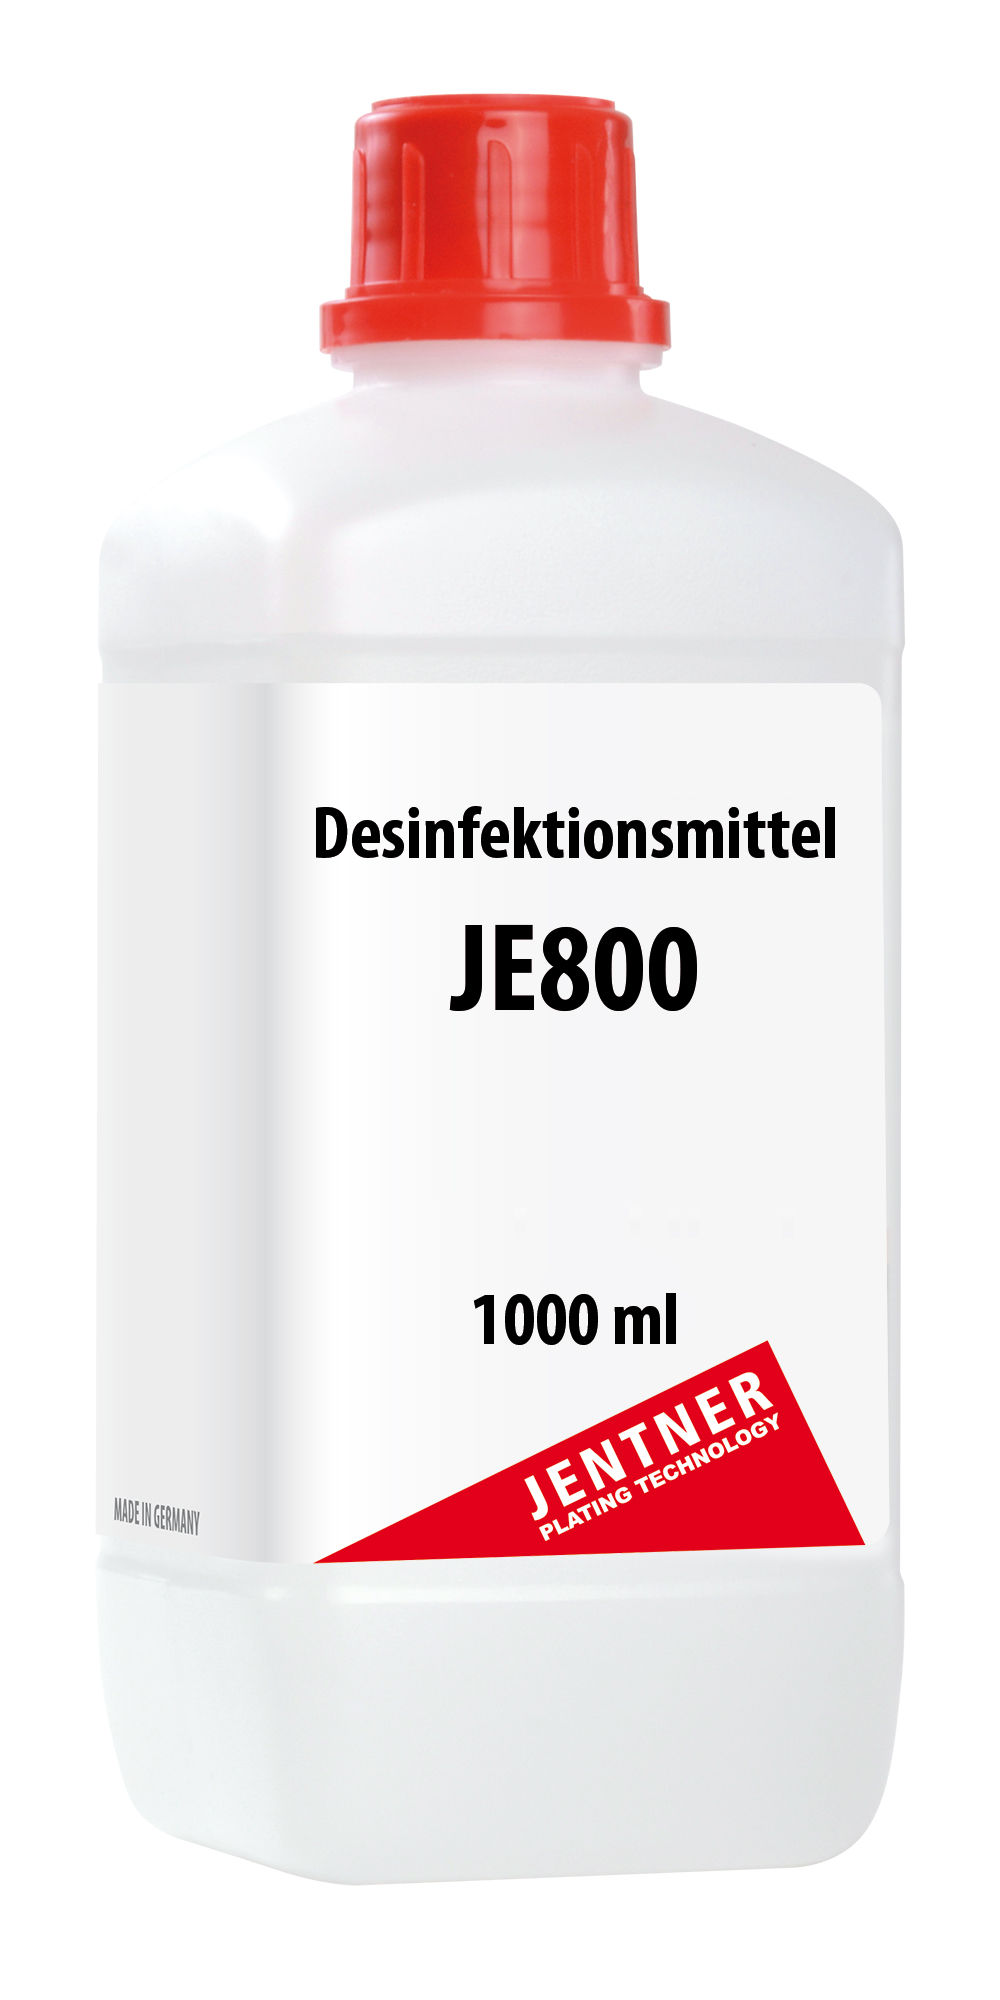 Disinfectant JE800 1000 ml